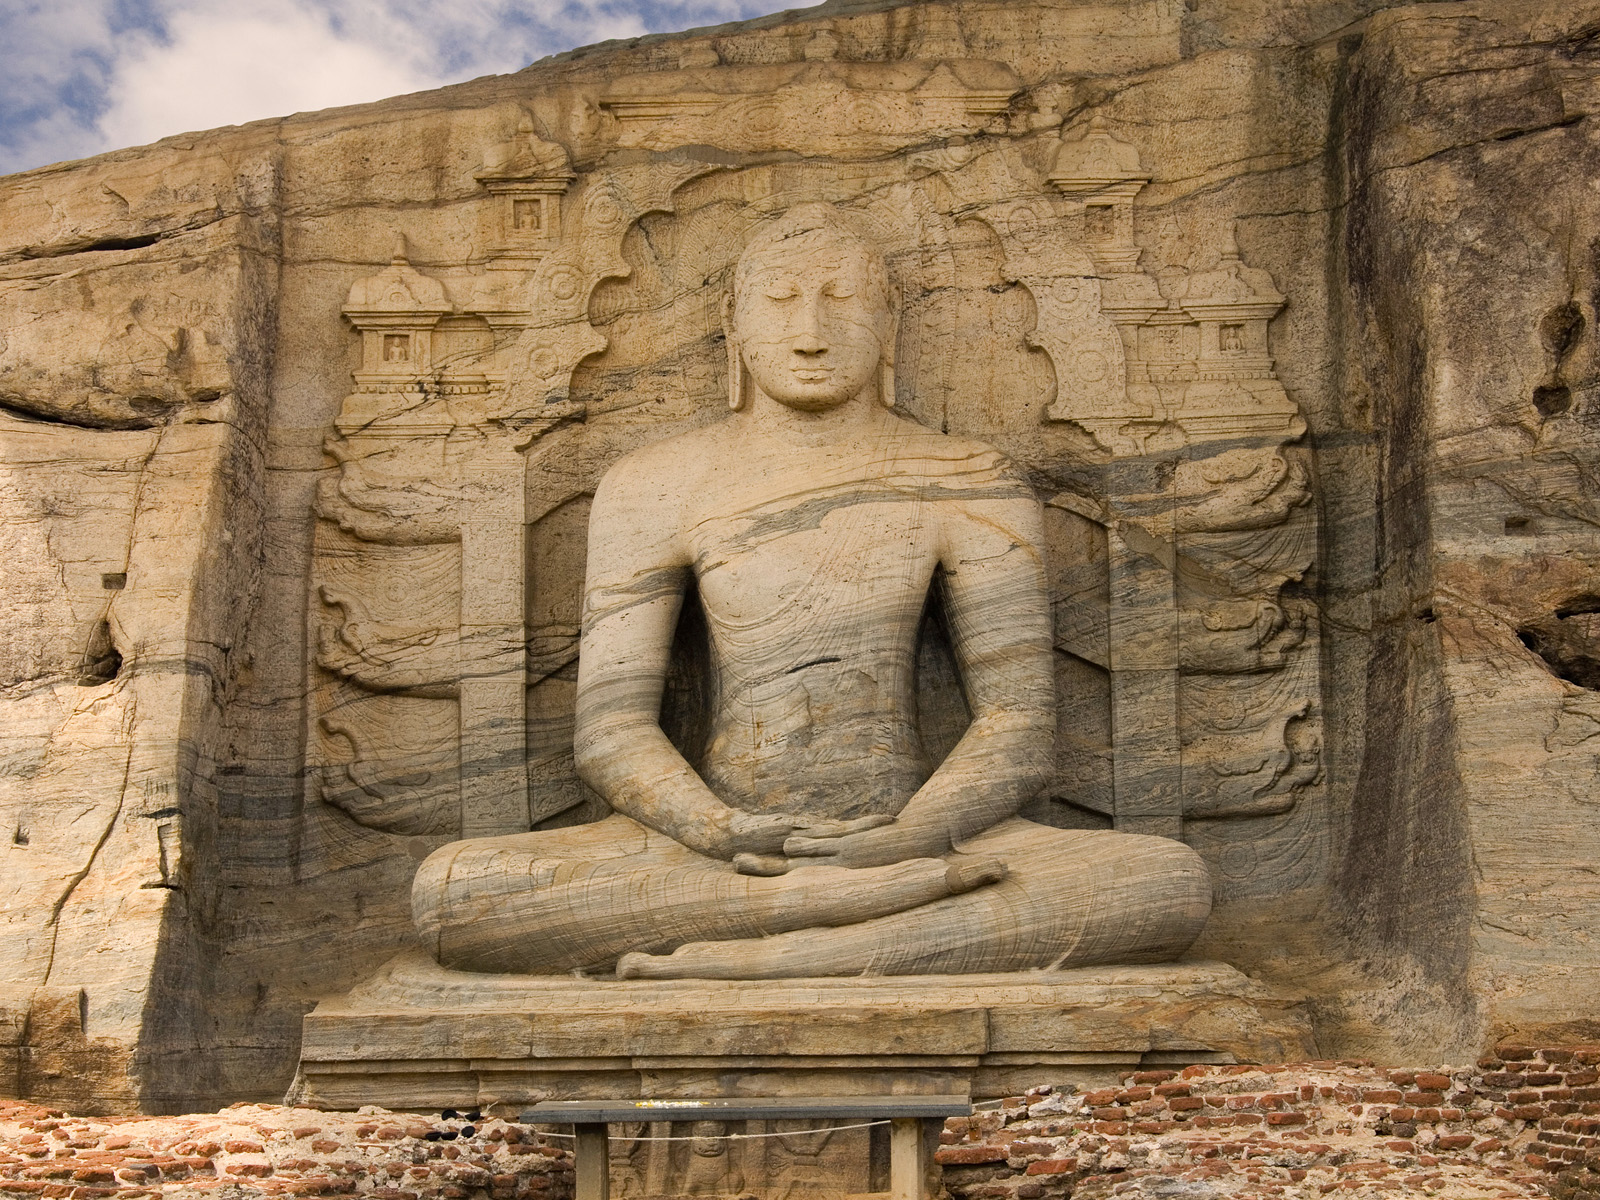 http://www.thehistoryhub.com/wp-content/uploads/2014/08/Polonnaruwa-Gal-Vihara-Buddhist-Statue-Pictures.jpg